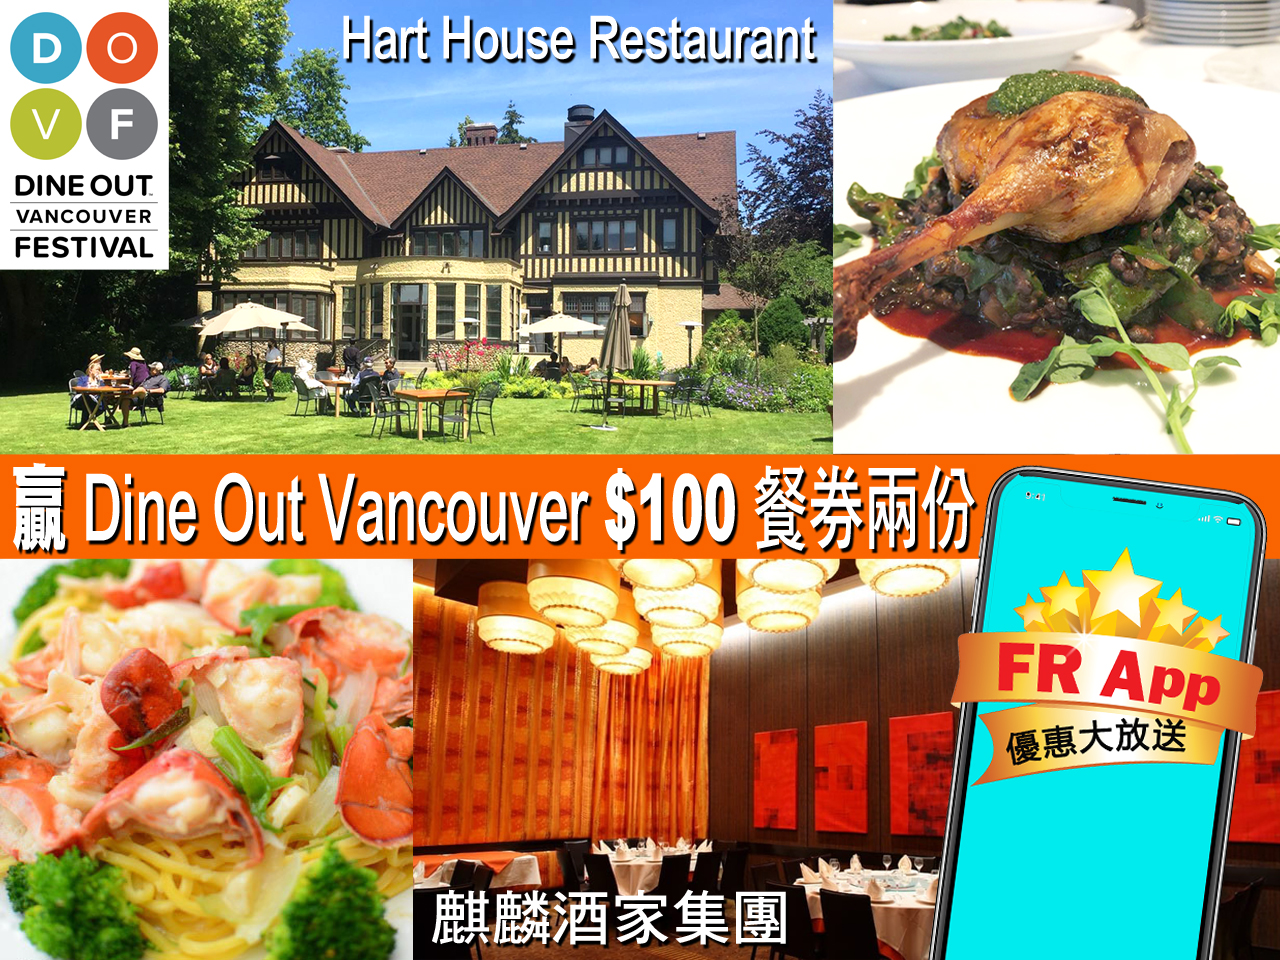 FR App 優惠大放送 贏 $100 Dine Out Vancouver 餐券 [得獎名單公佈]